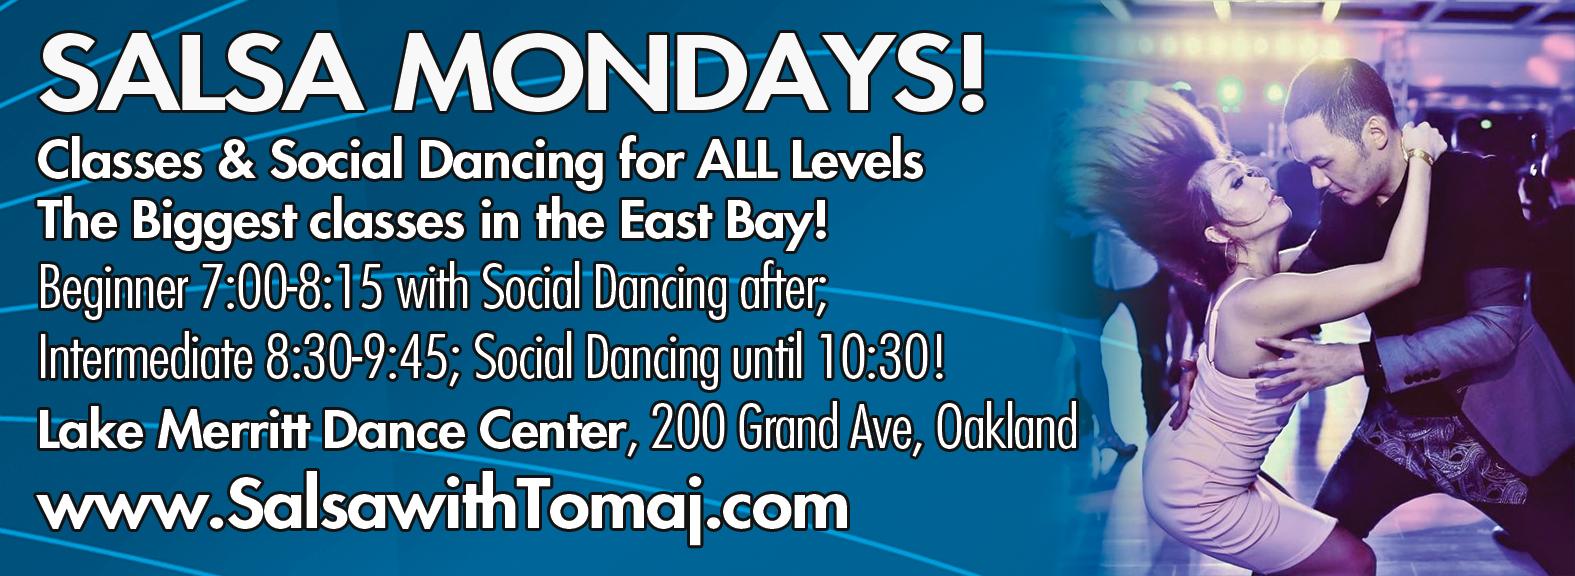 Salsa Mondays - Classes & Social Dancing for All Levels!